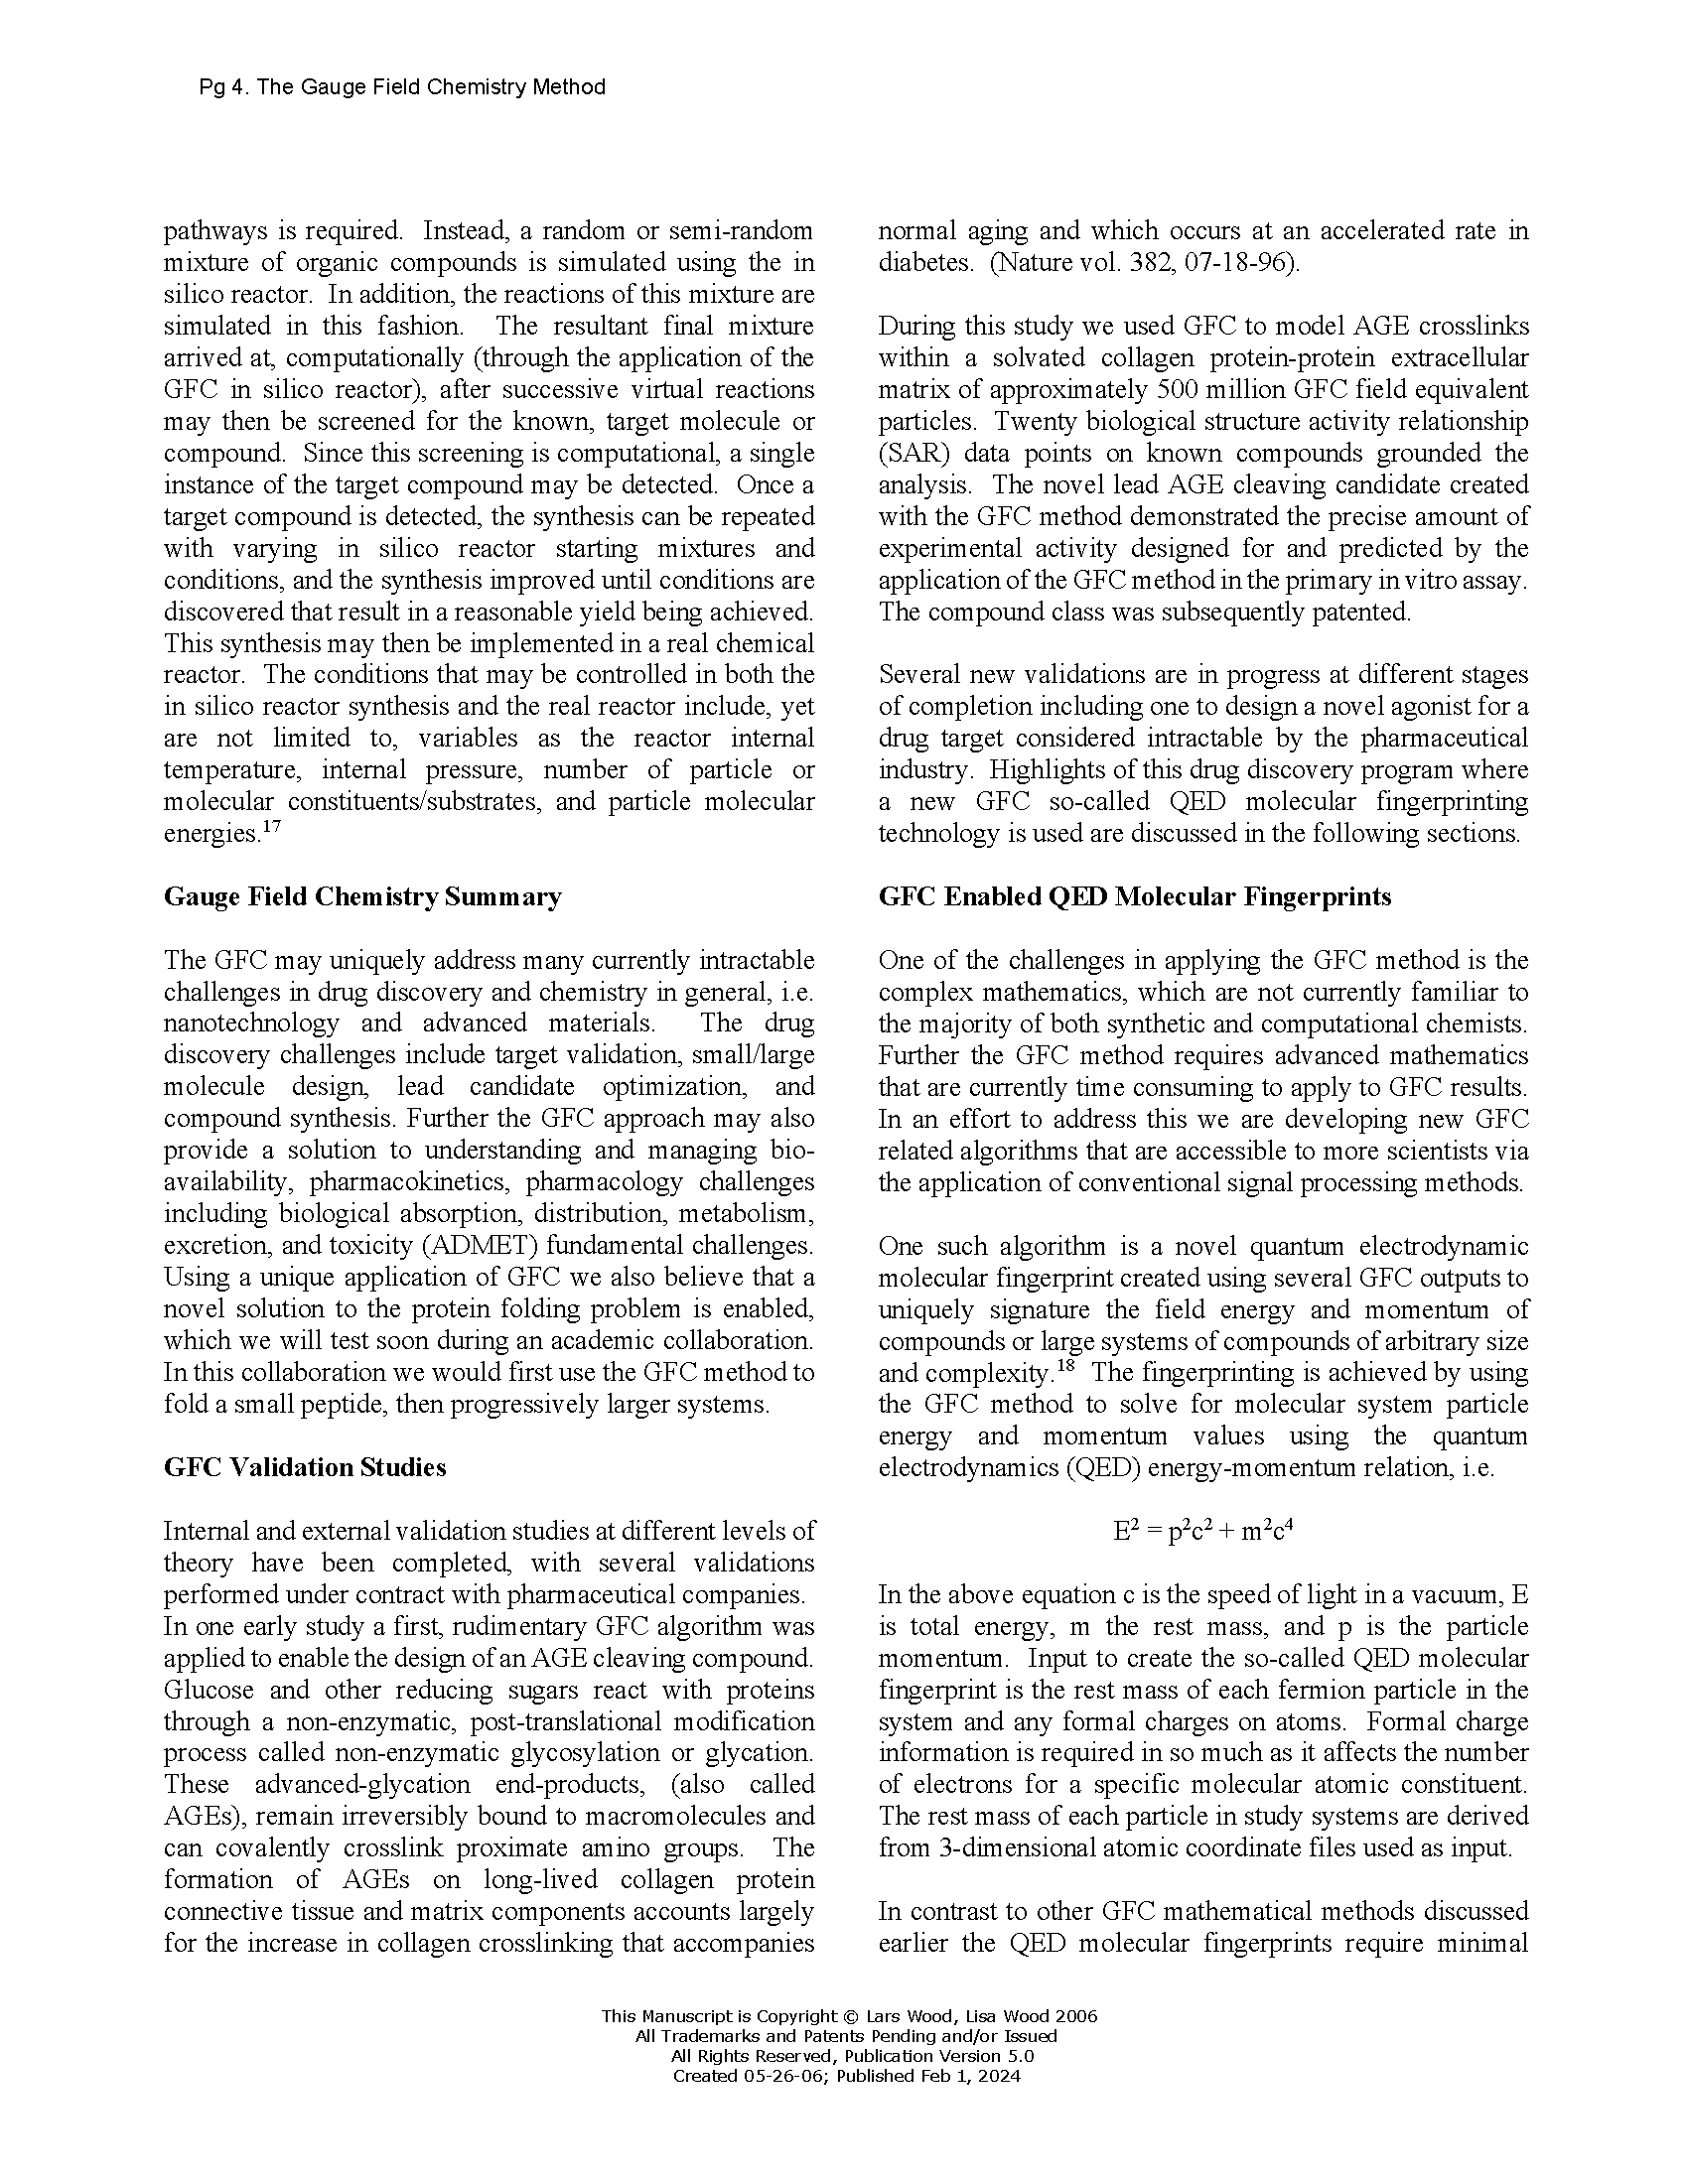 The Gauge Field Chemistry Method V5 Published_Page_04.png